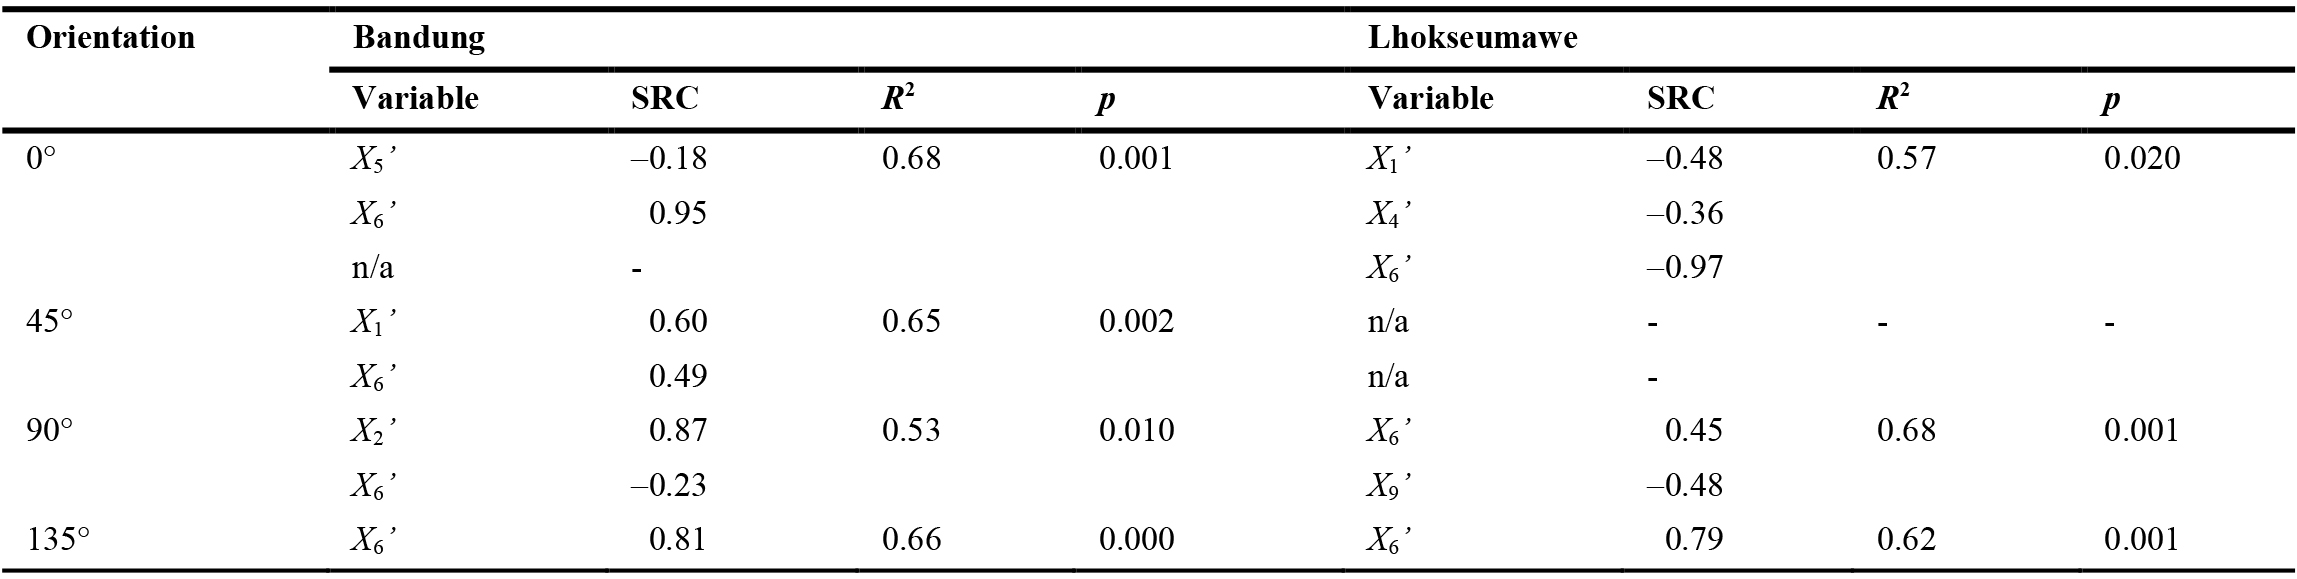 Variables and SRC values for Bandung and Lhokseumawe at all orientations.